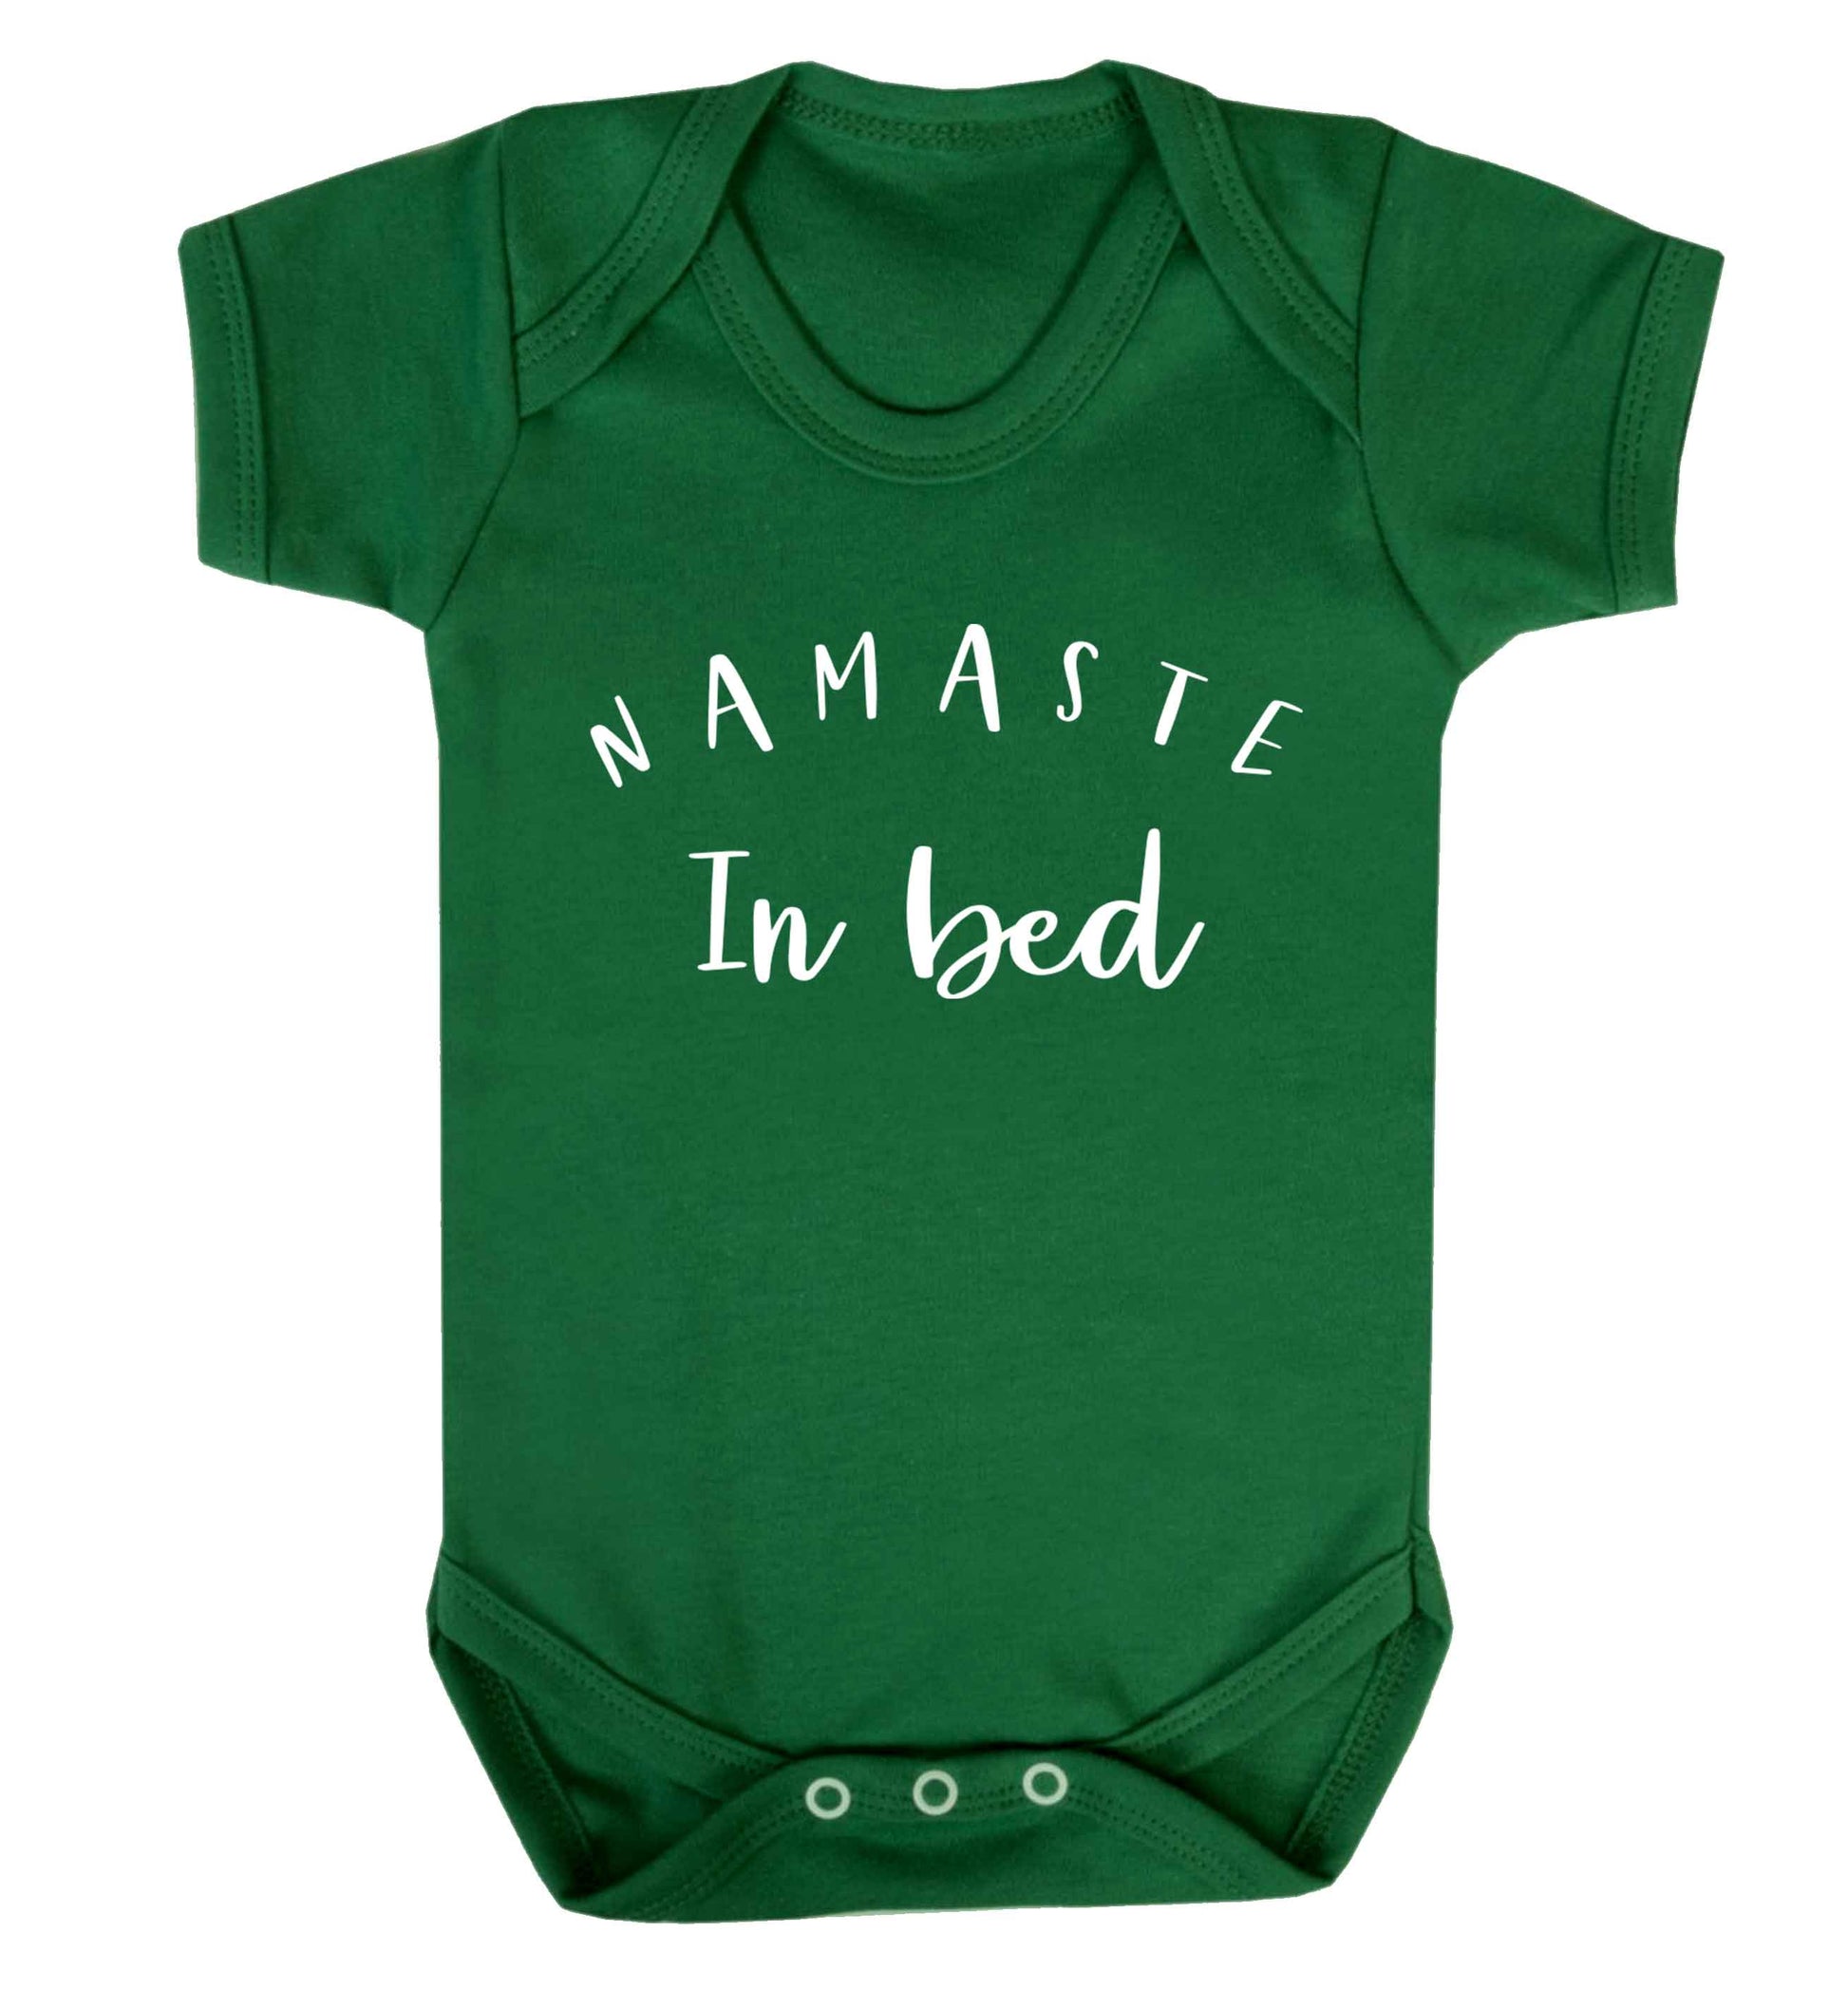 Namaste in bed Baby Vest green 18-24 months